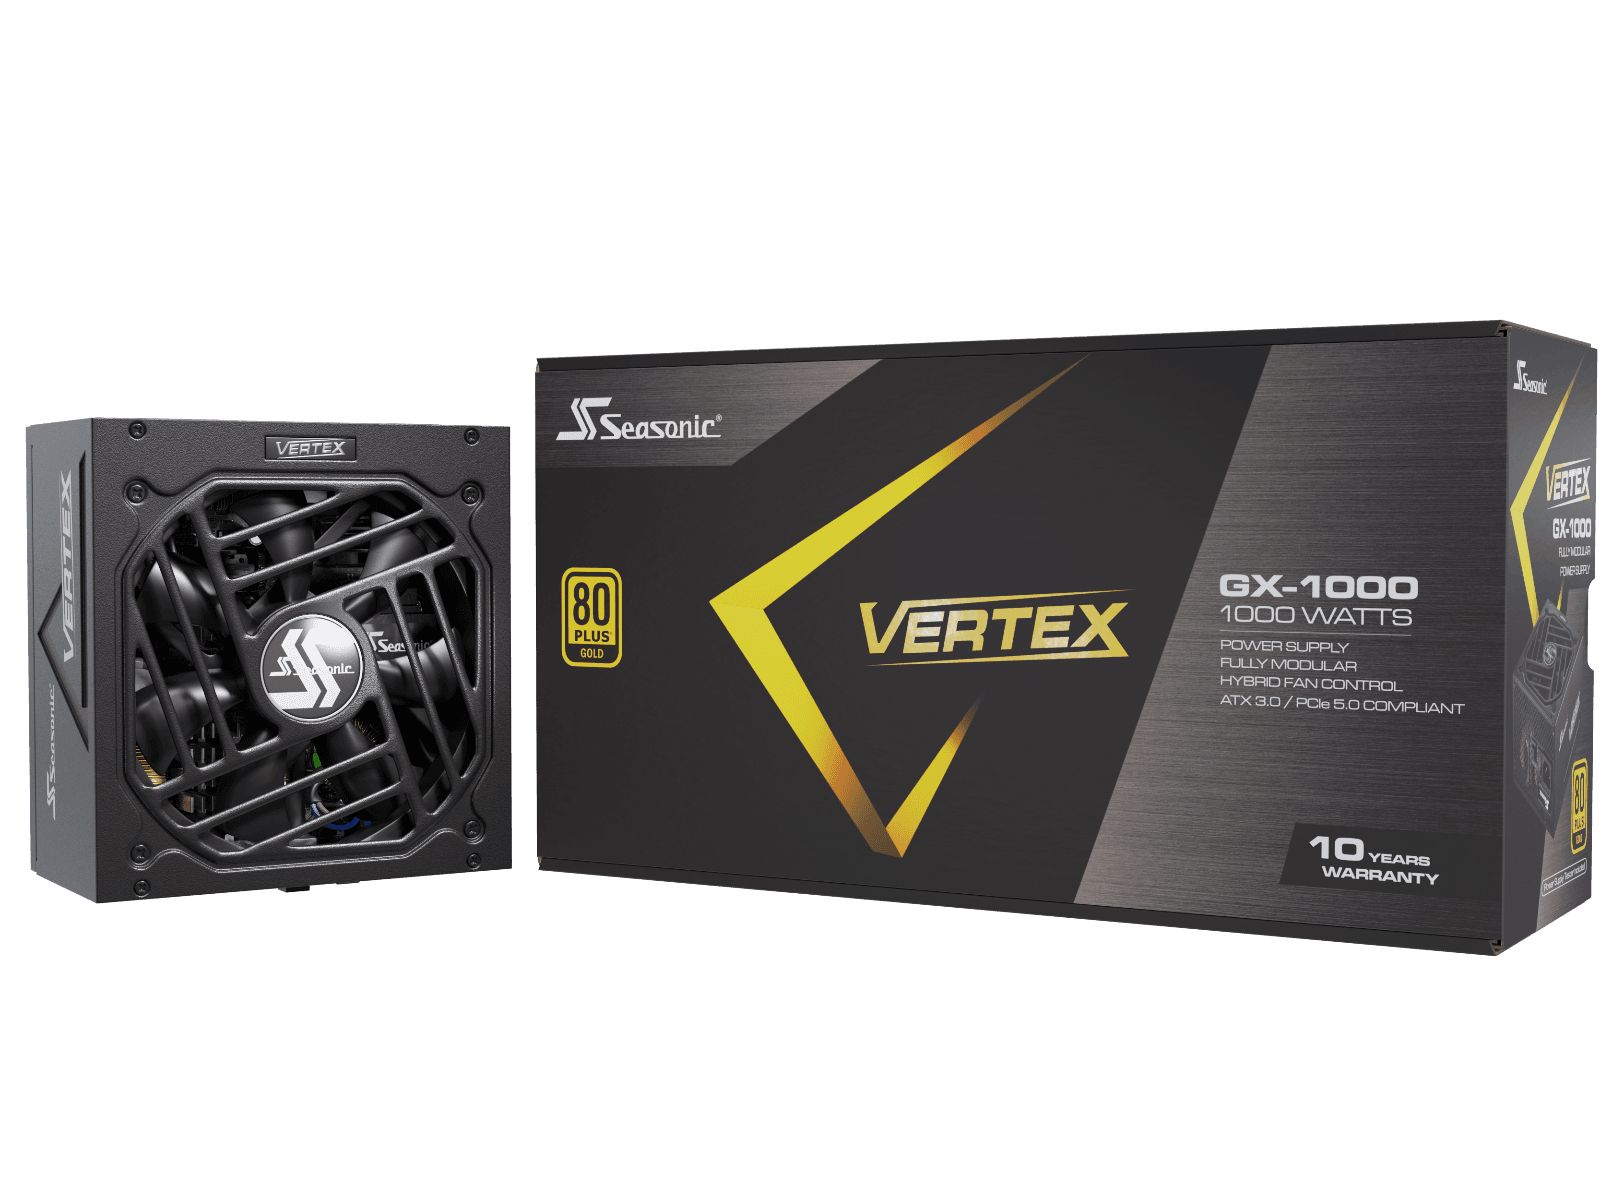 VERTEX 80 PLUS GOLD GX1000 1000W PSU